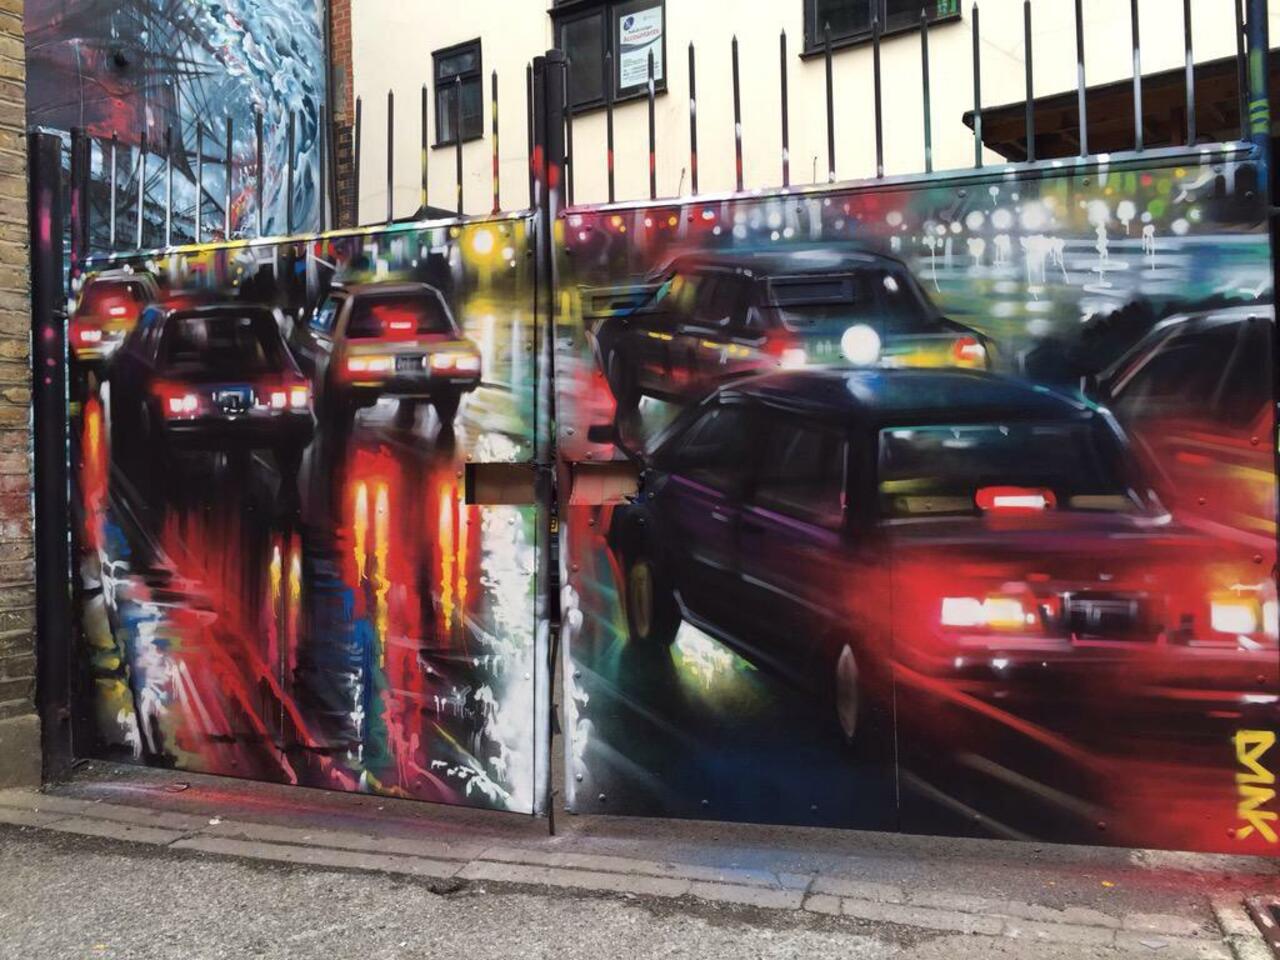 New Street Art by DanKitchener in Brick Lane London 

#art #graffiti #mural #streetart http://t.co/daA4SVhIaj